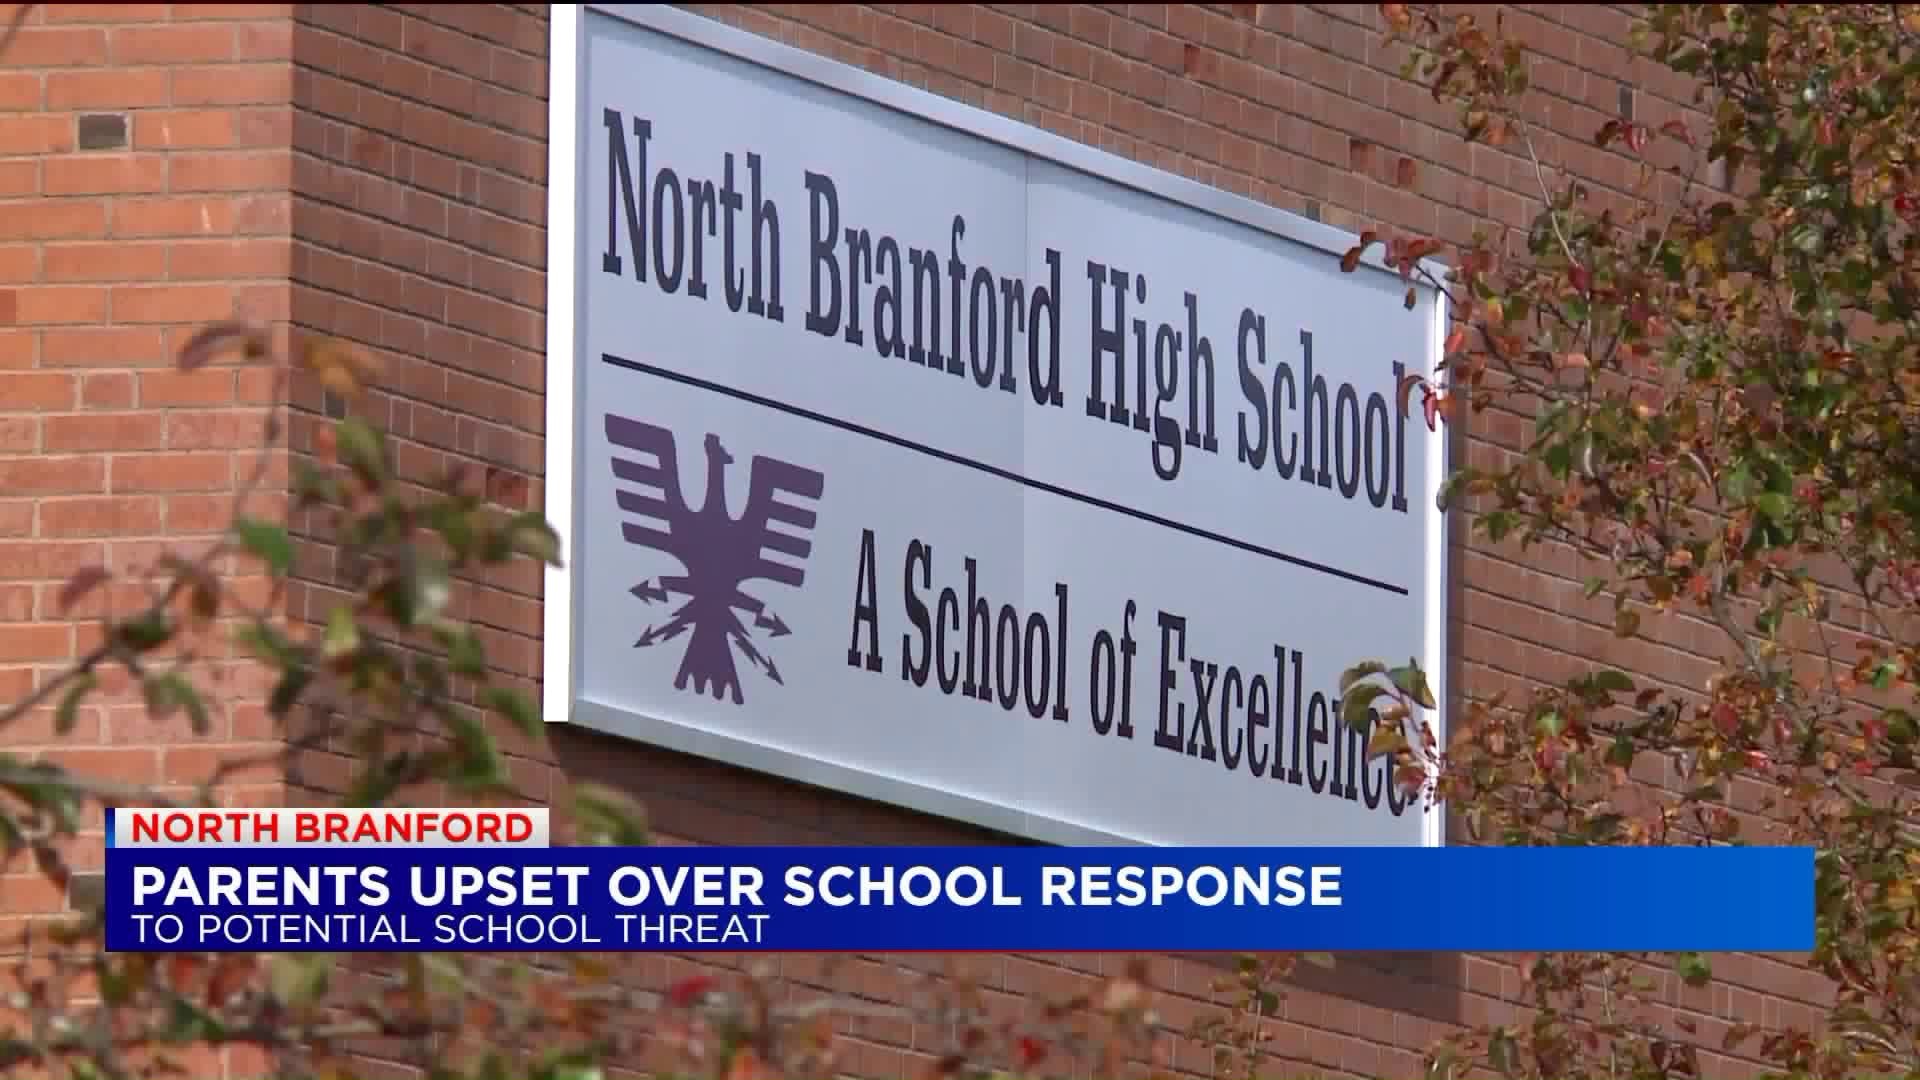 Thorough investigation follows rumors of schools threat in North Branford